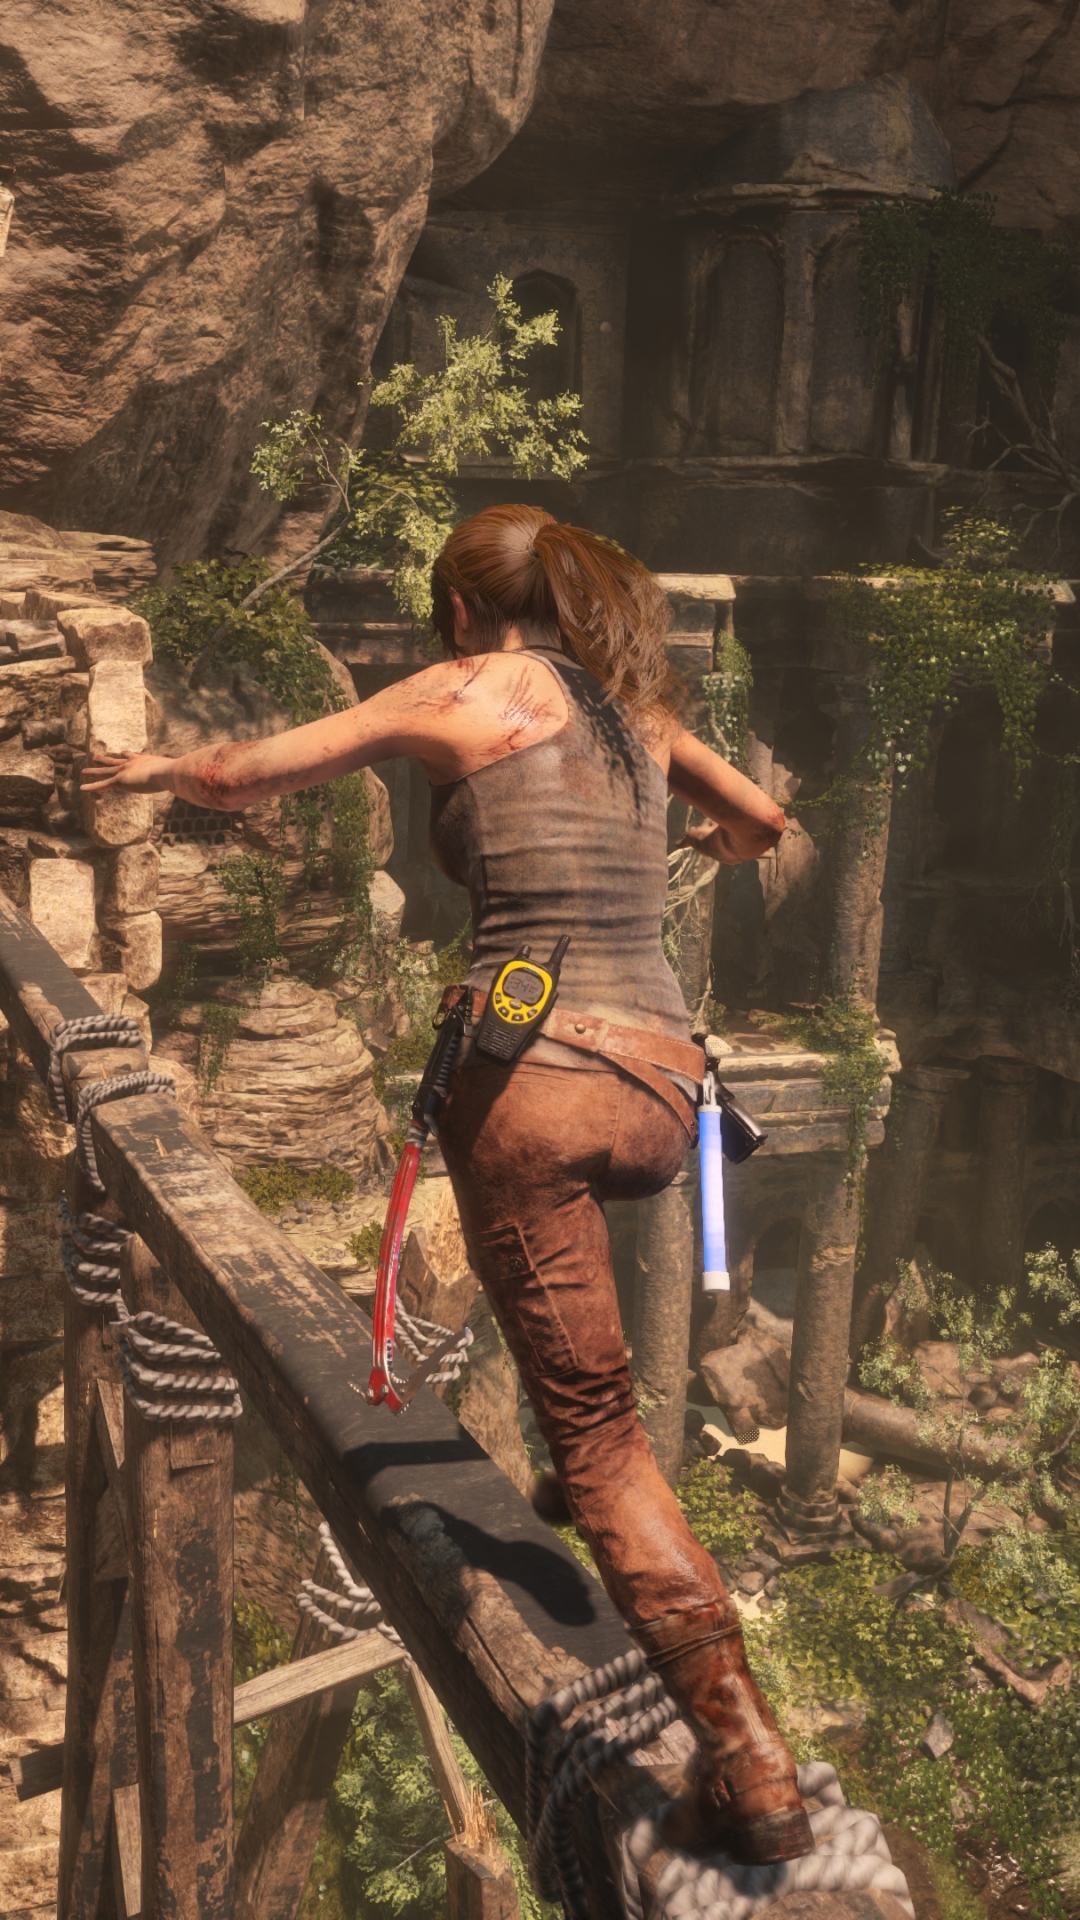 Descarga gratuita de fondo de pantalla para móvil de Tomb Raider, Videojuego, Rise Of The Tomb Raider.